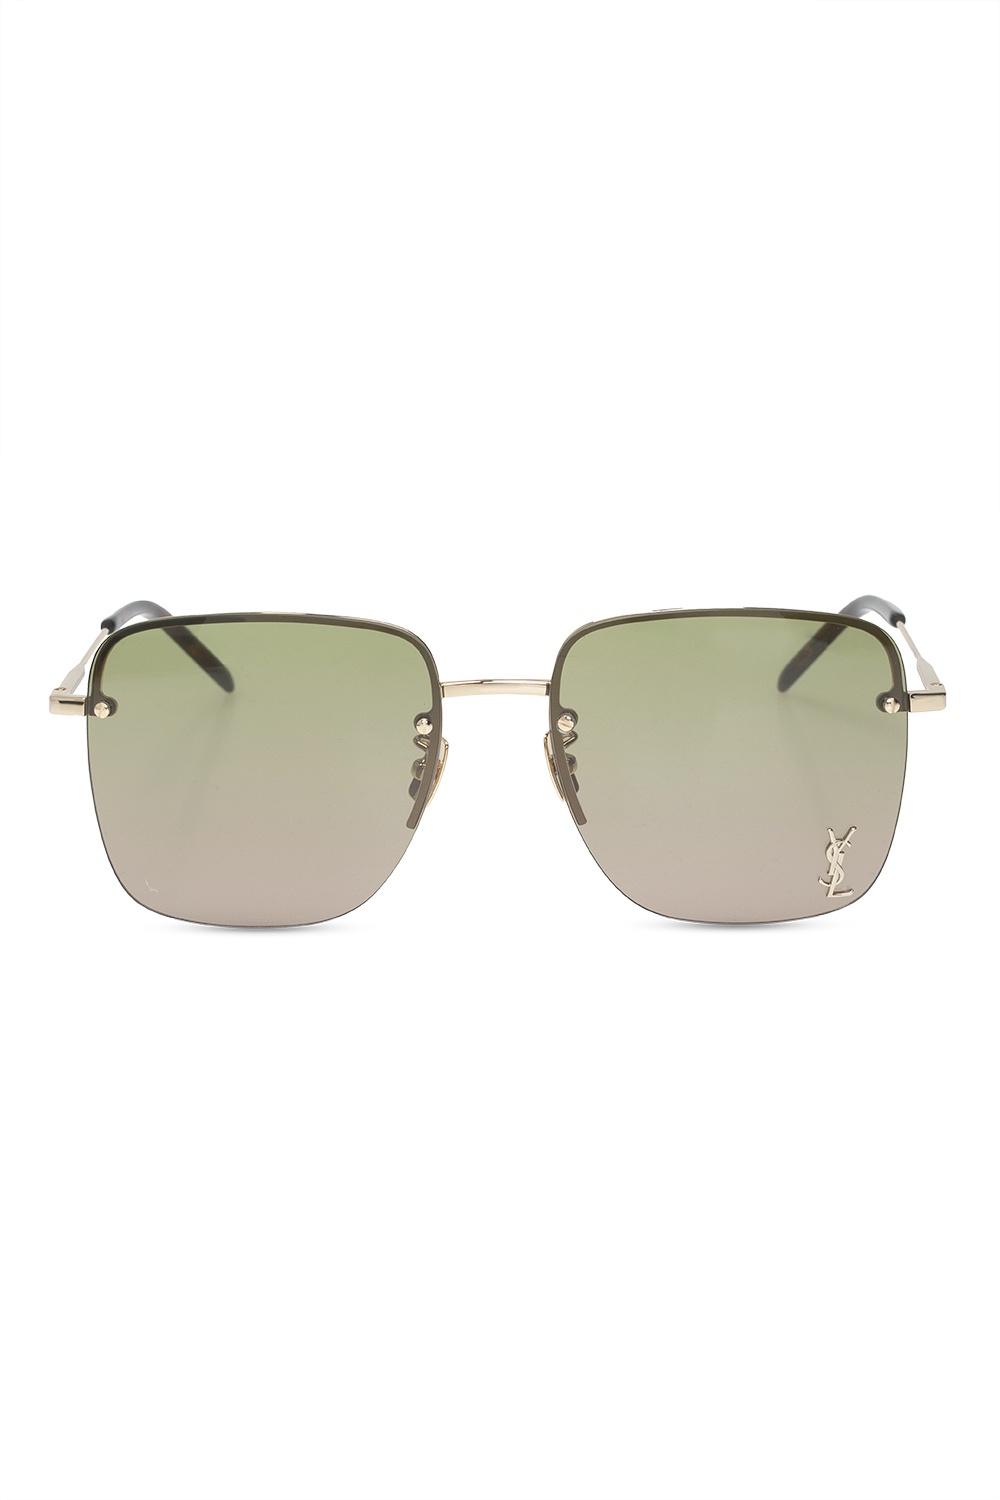 Saint Laurent ‘SL 312 M’ brain sunglasses